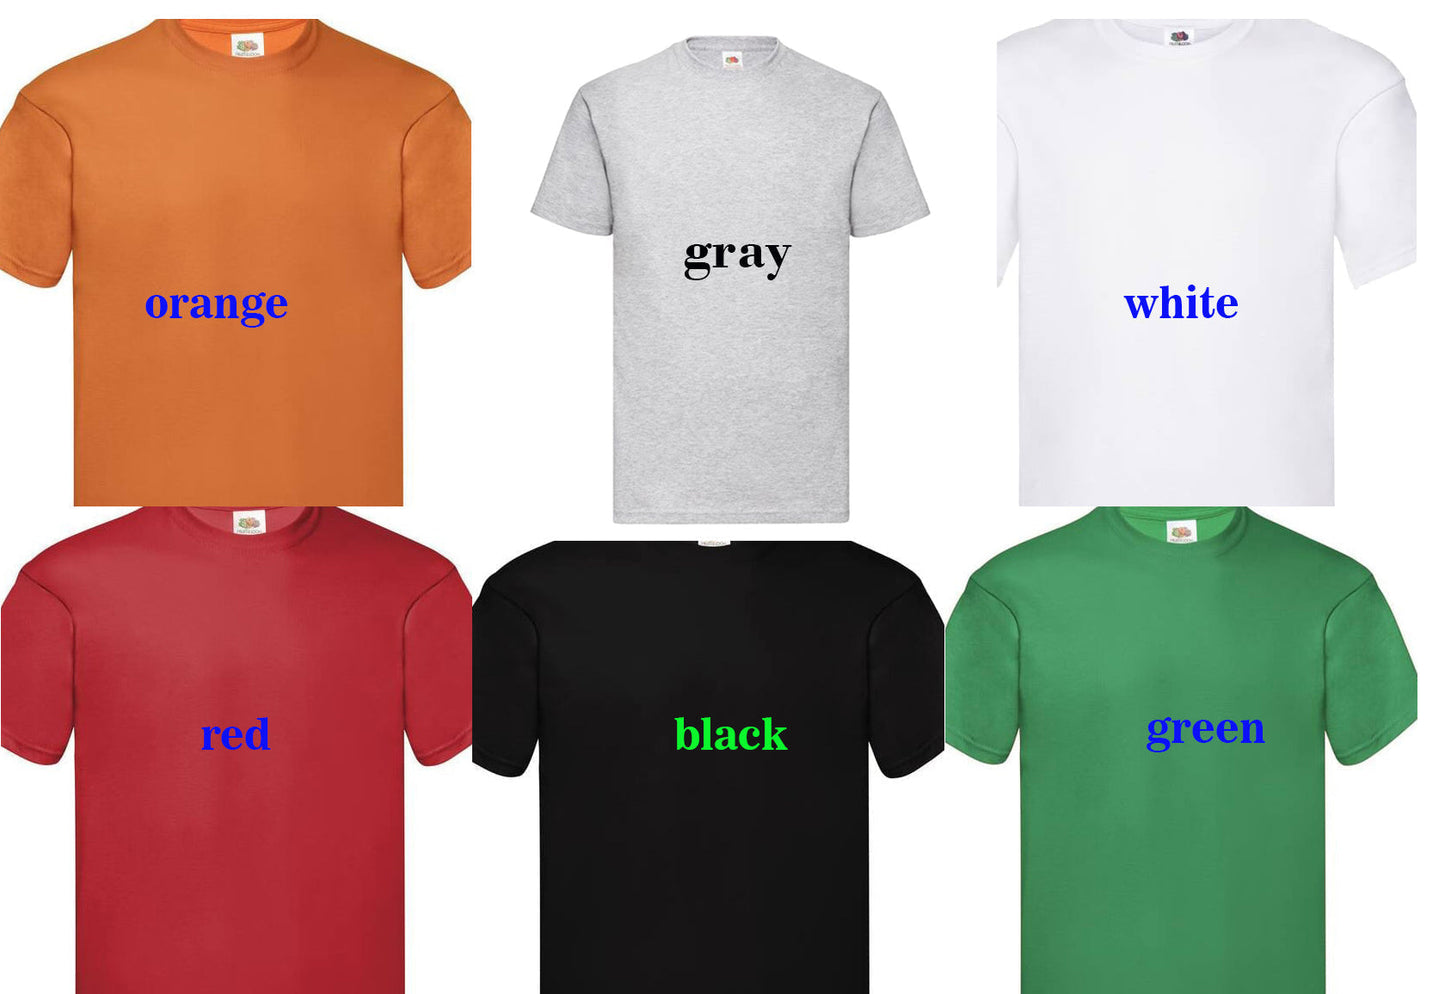 044. BUNNY UNICORN, Custom Made Shirt, Personalized T-Shirt, Custom Text, Make Your Own Shirt, Custom Tee